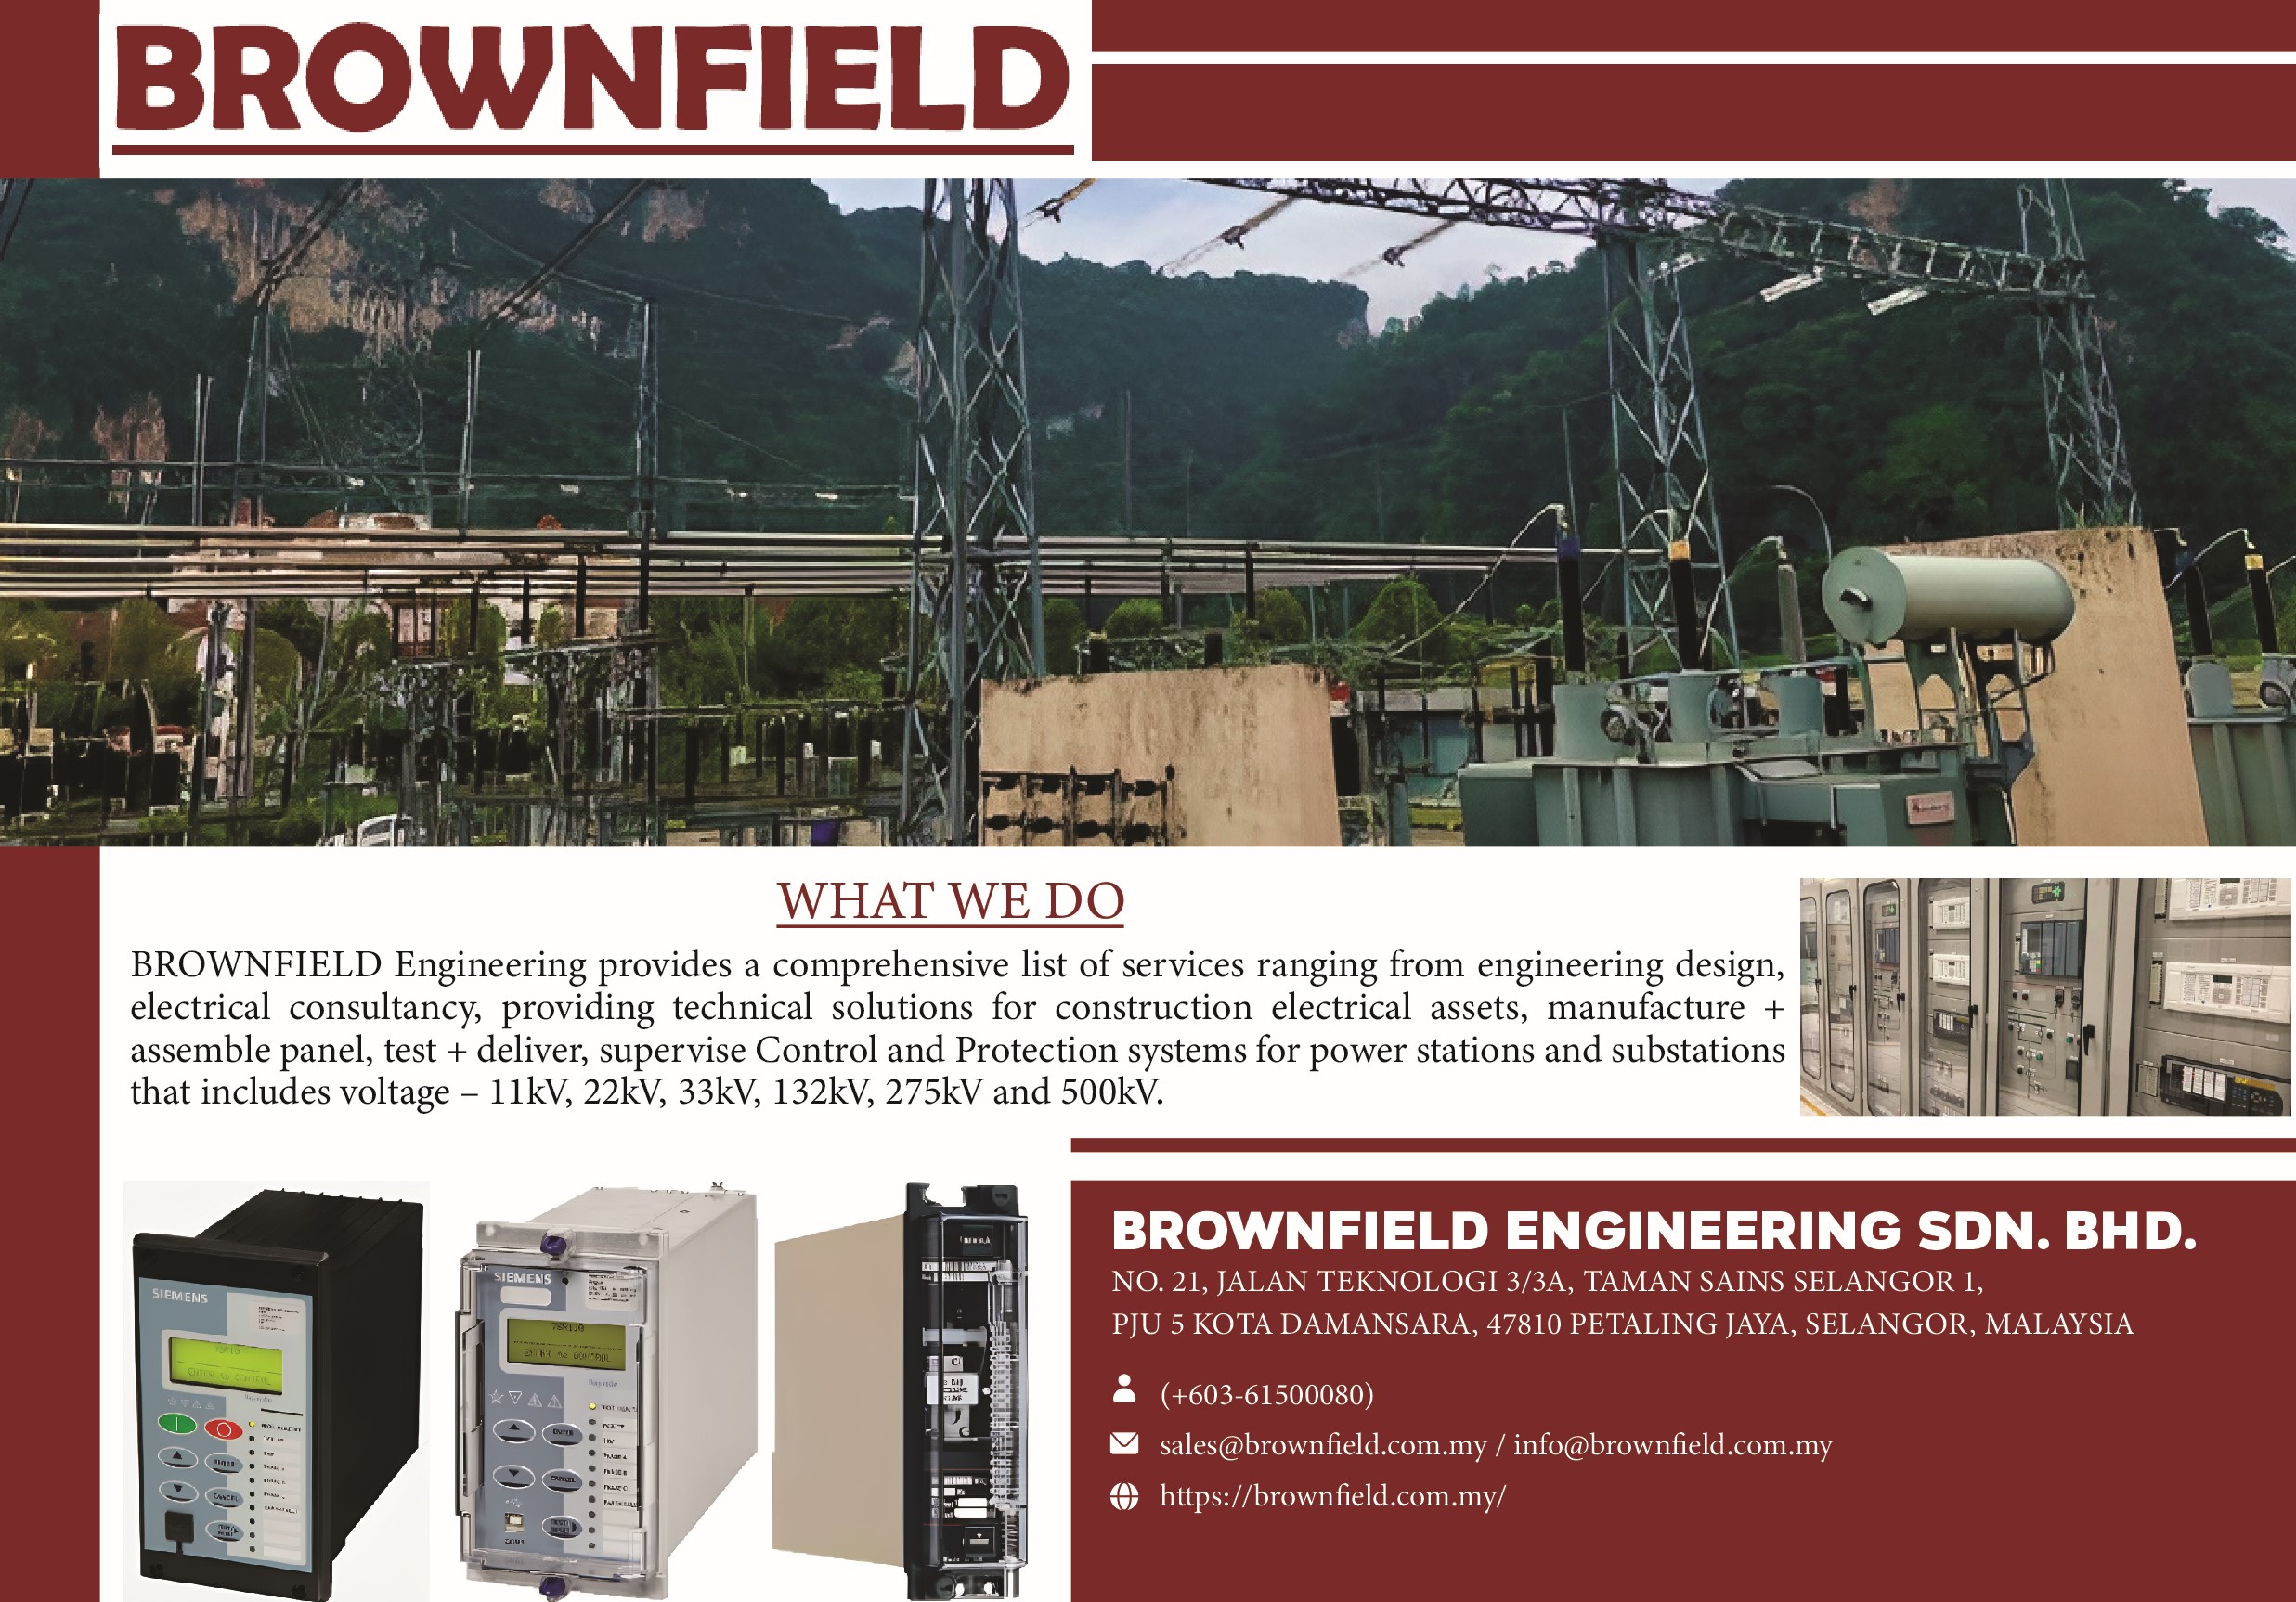 BROWNFIELD ENGINEERING SDN. BHD.